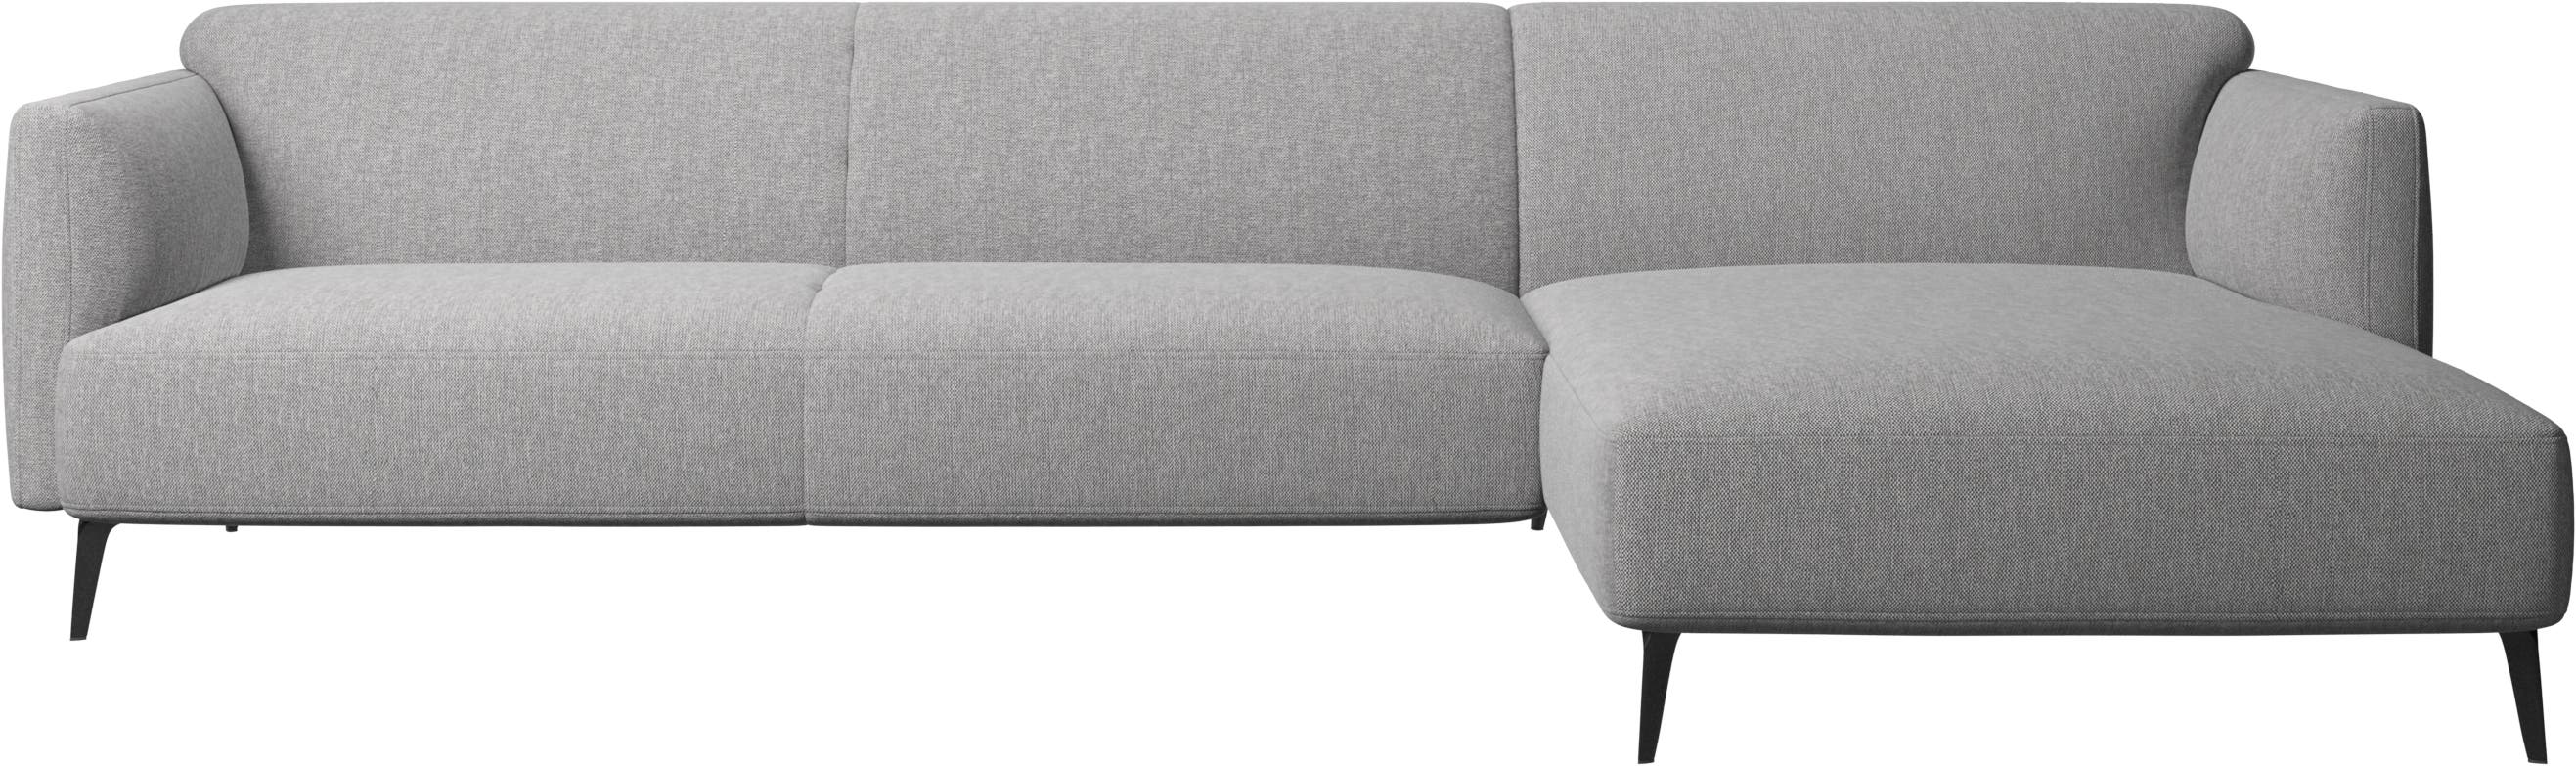 Modena sofa med hvilemodul